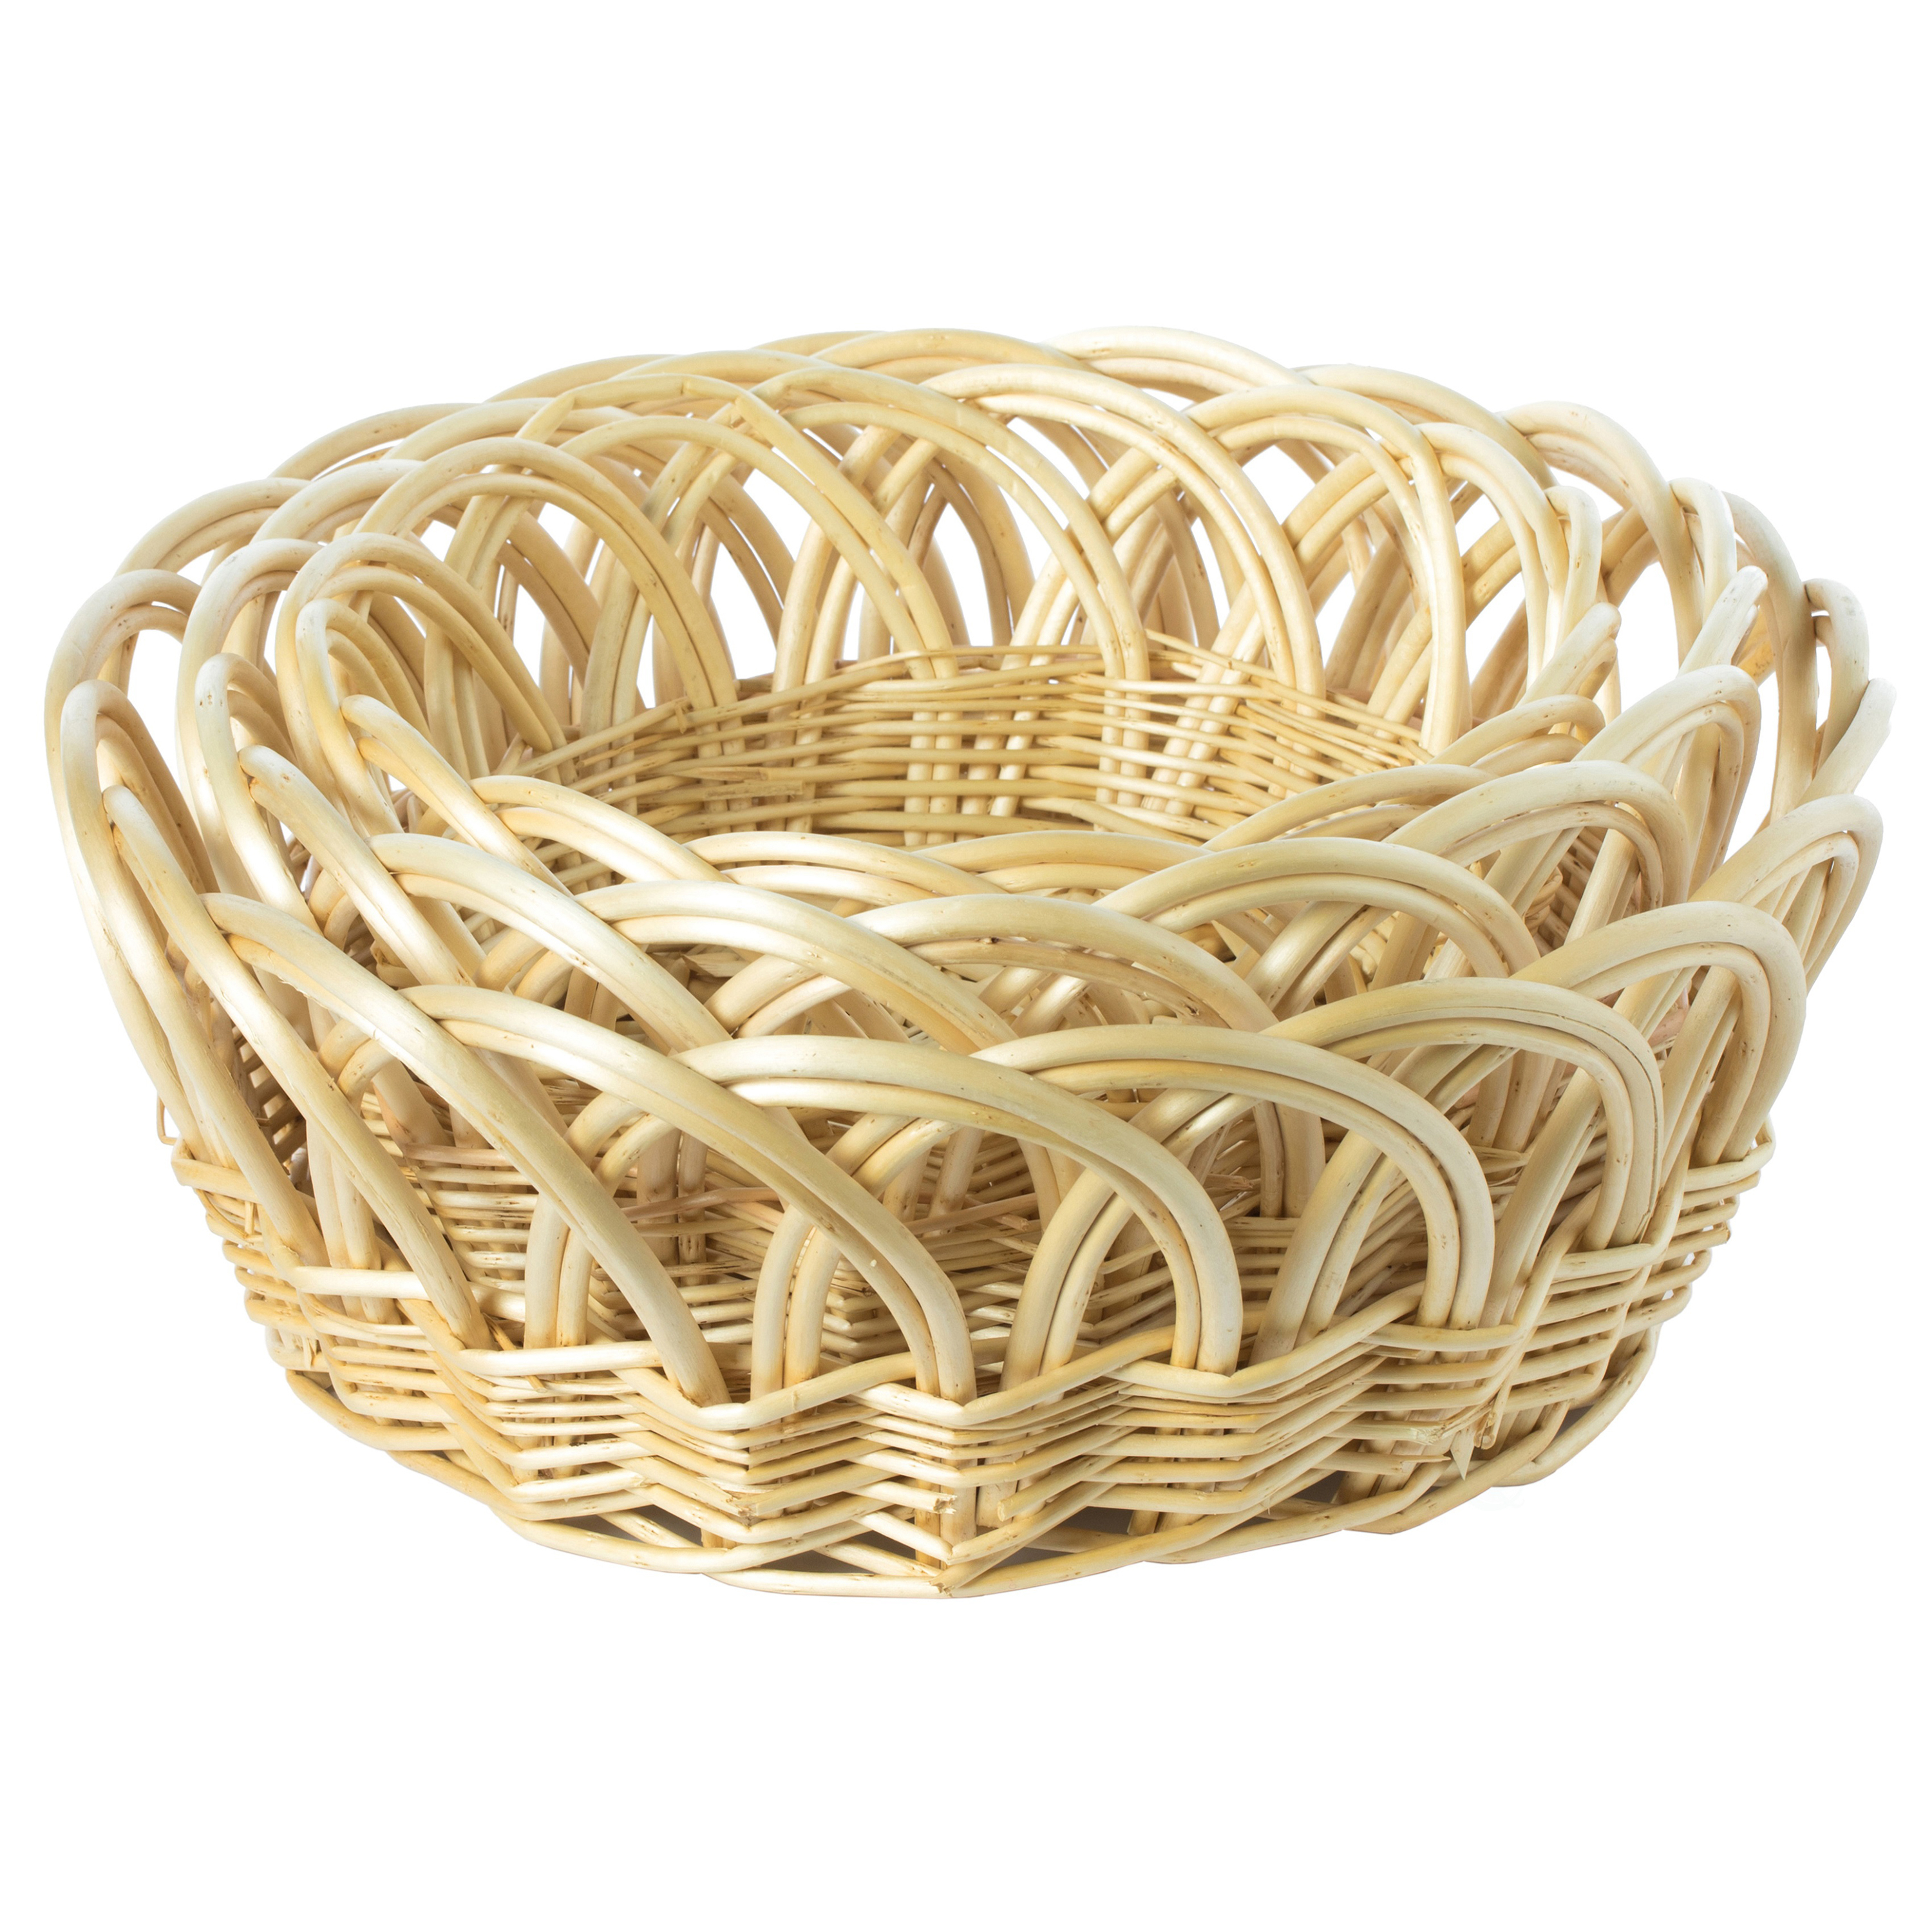 Decorative Round Fruit Bowl Bread Basket Serving Tray - Medium